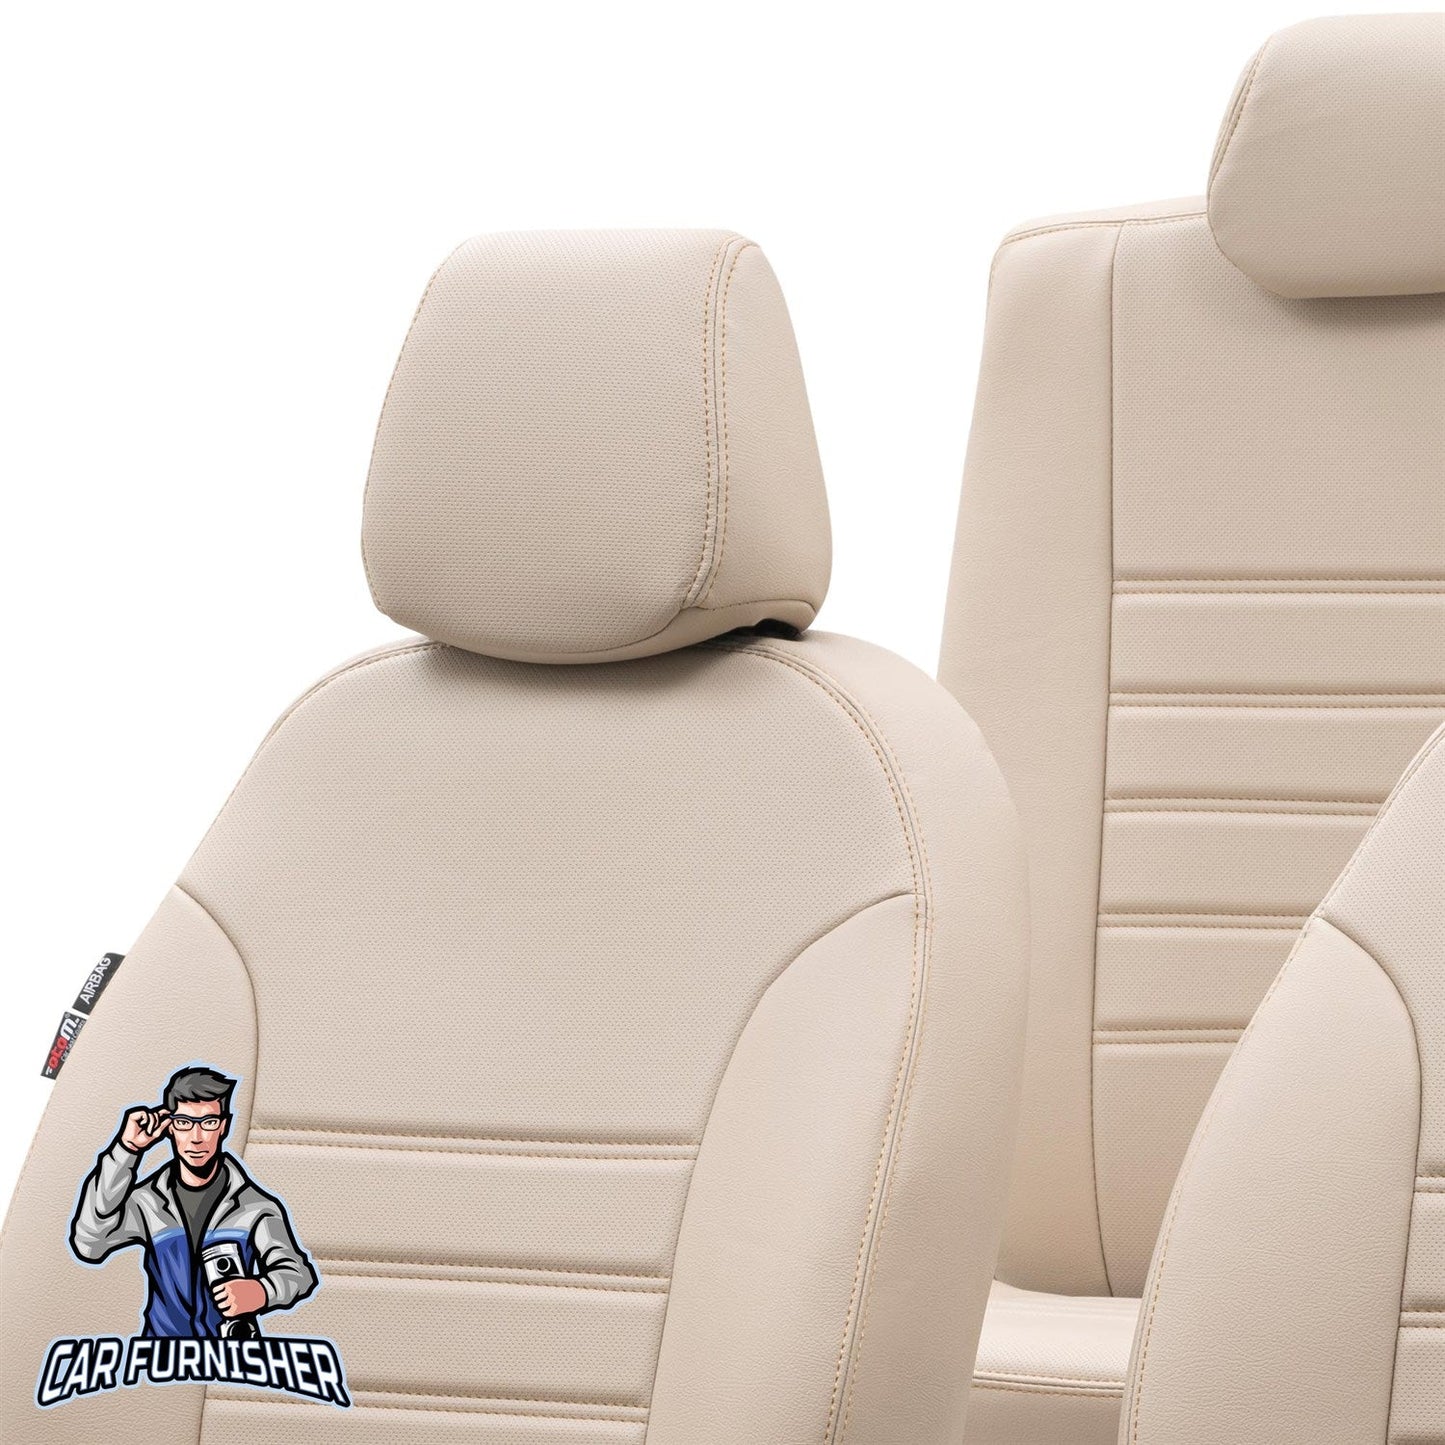 Volkswagen Passat Seat Cover Istanbul Leather Design Beige Leather